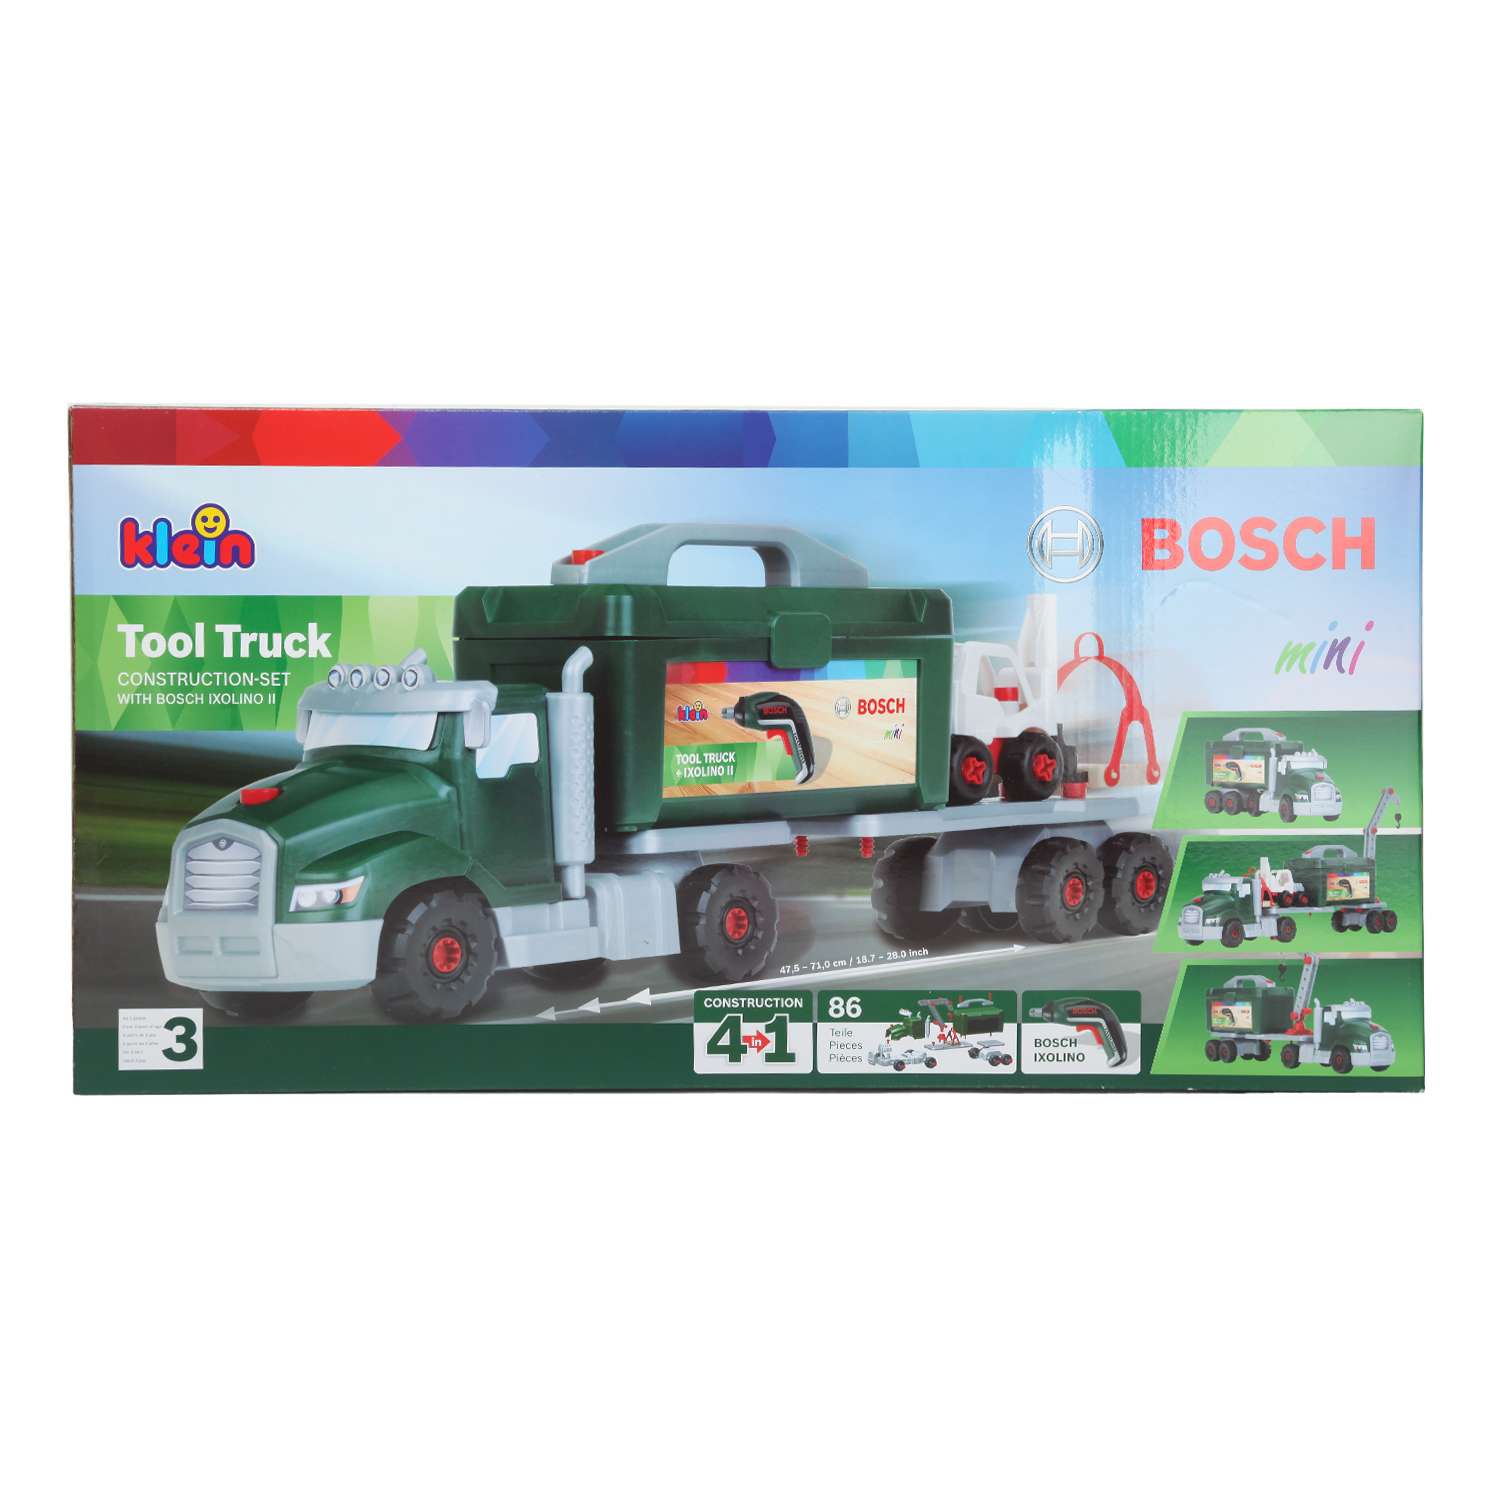 Набор инструментов Klein Bosch Tool Truck Set + Ixolino 8640 - фото 1